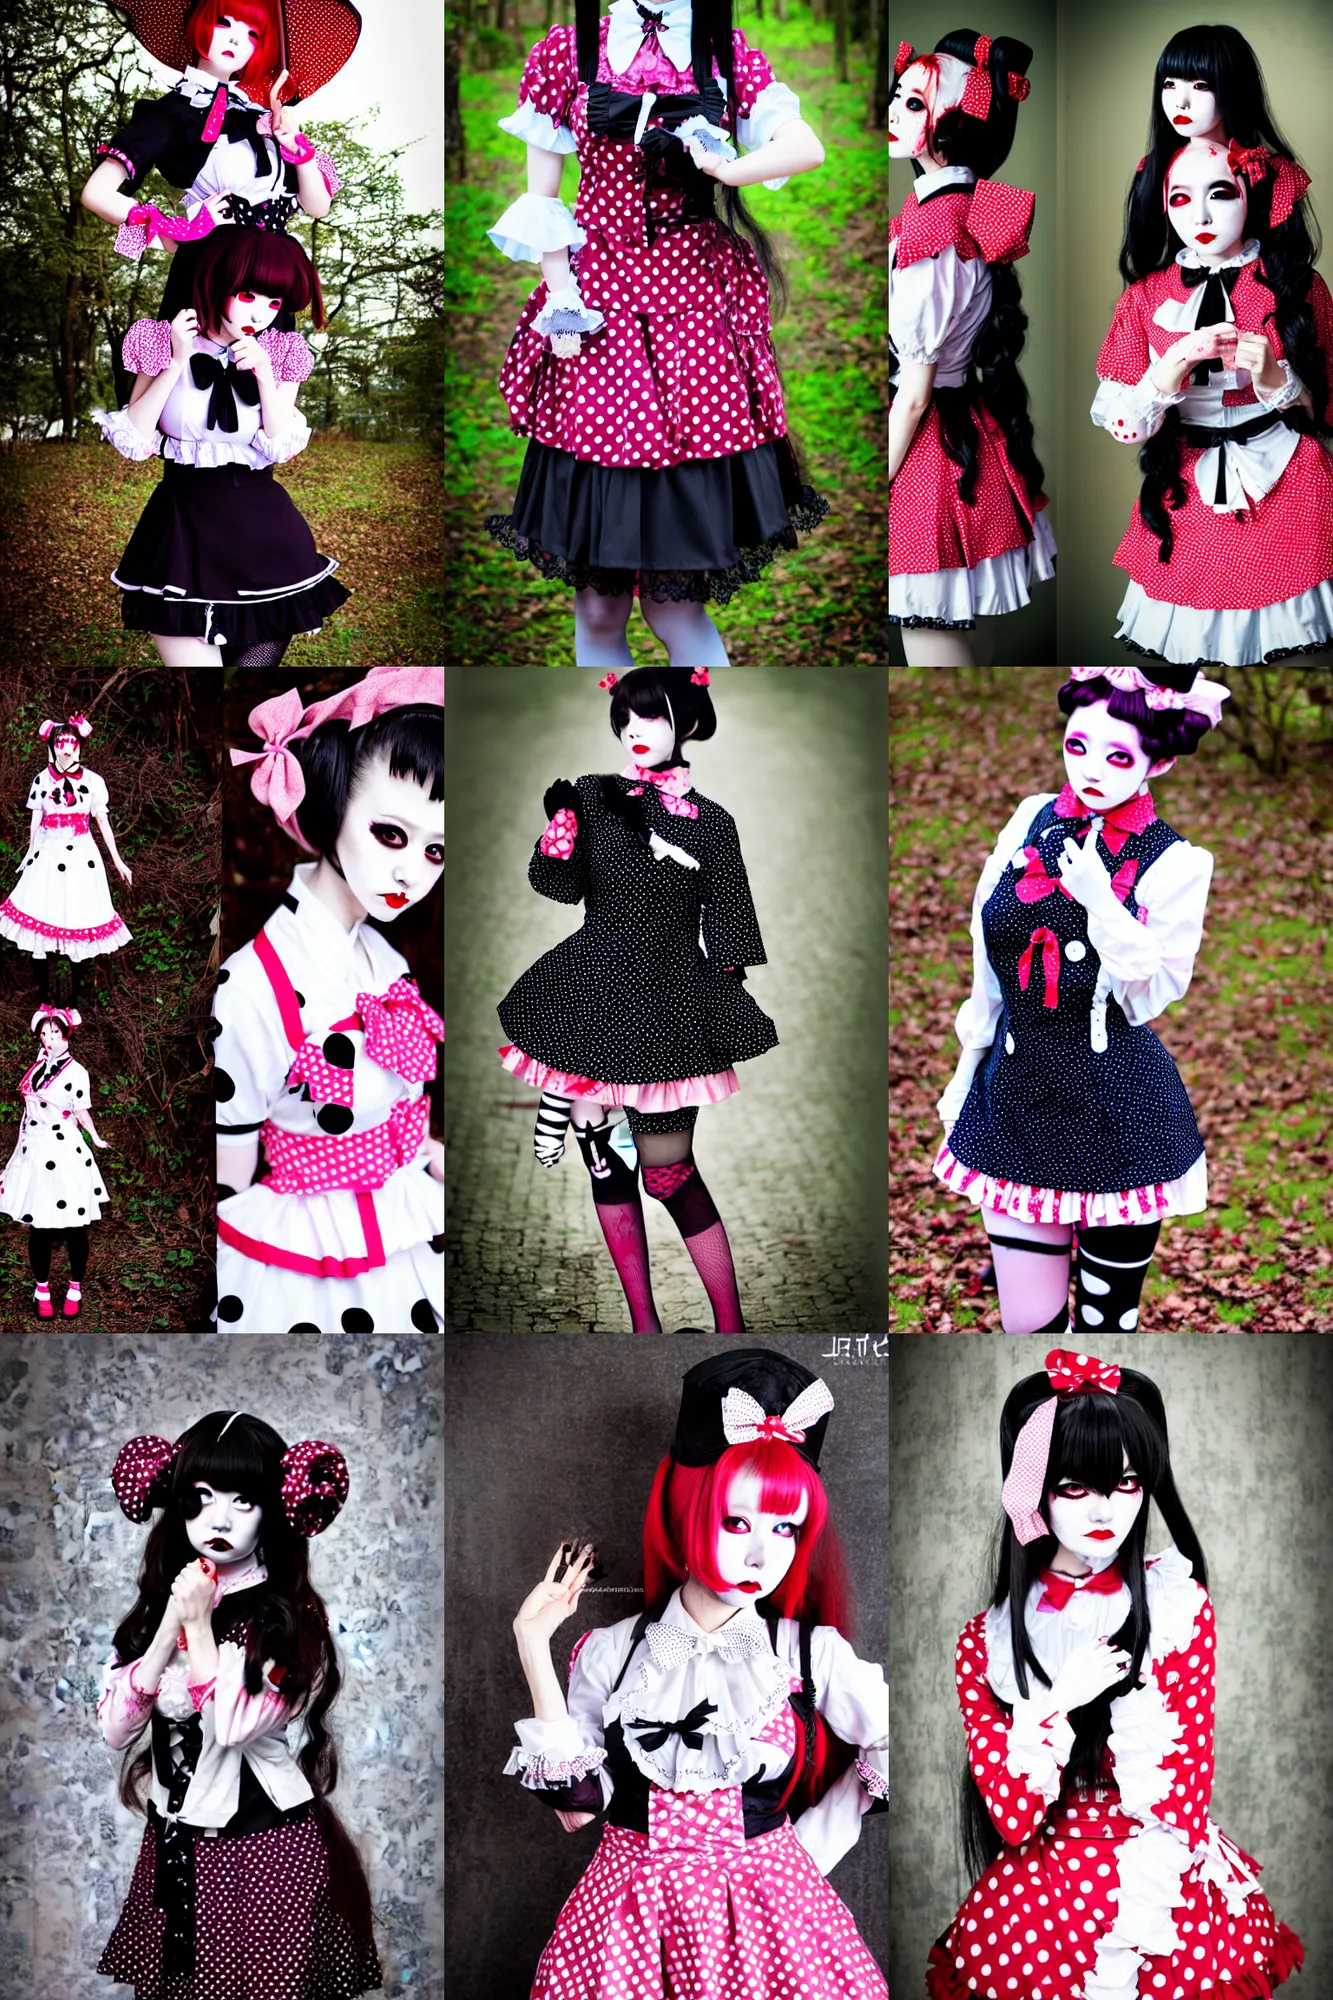 Prompt: Zombie lolita model wearing fashion, agura kei, shironuri, polka dot, haori, uniforms, bunka dolls, fashion photograpy